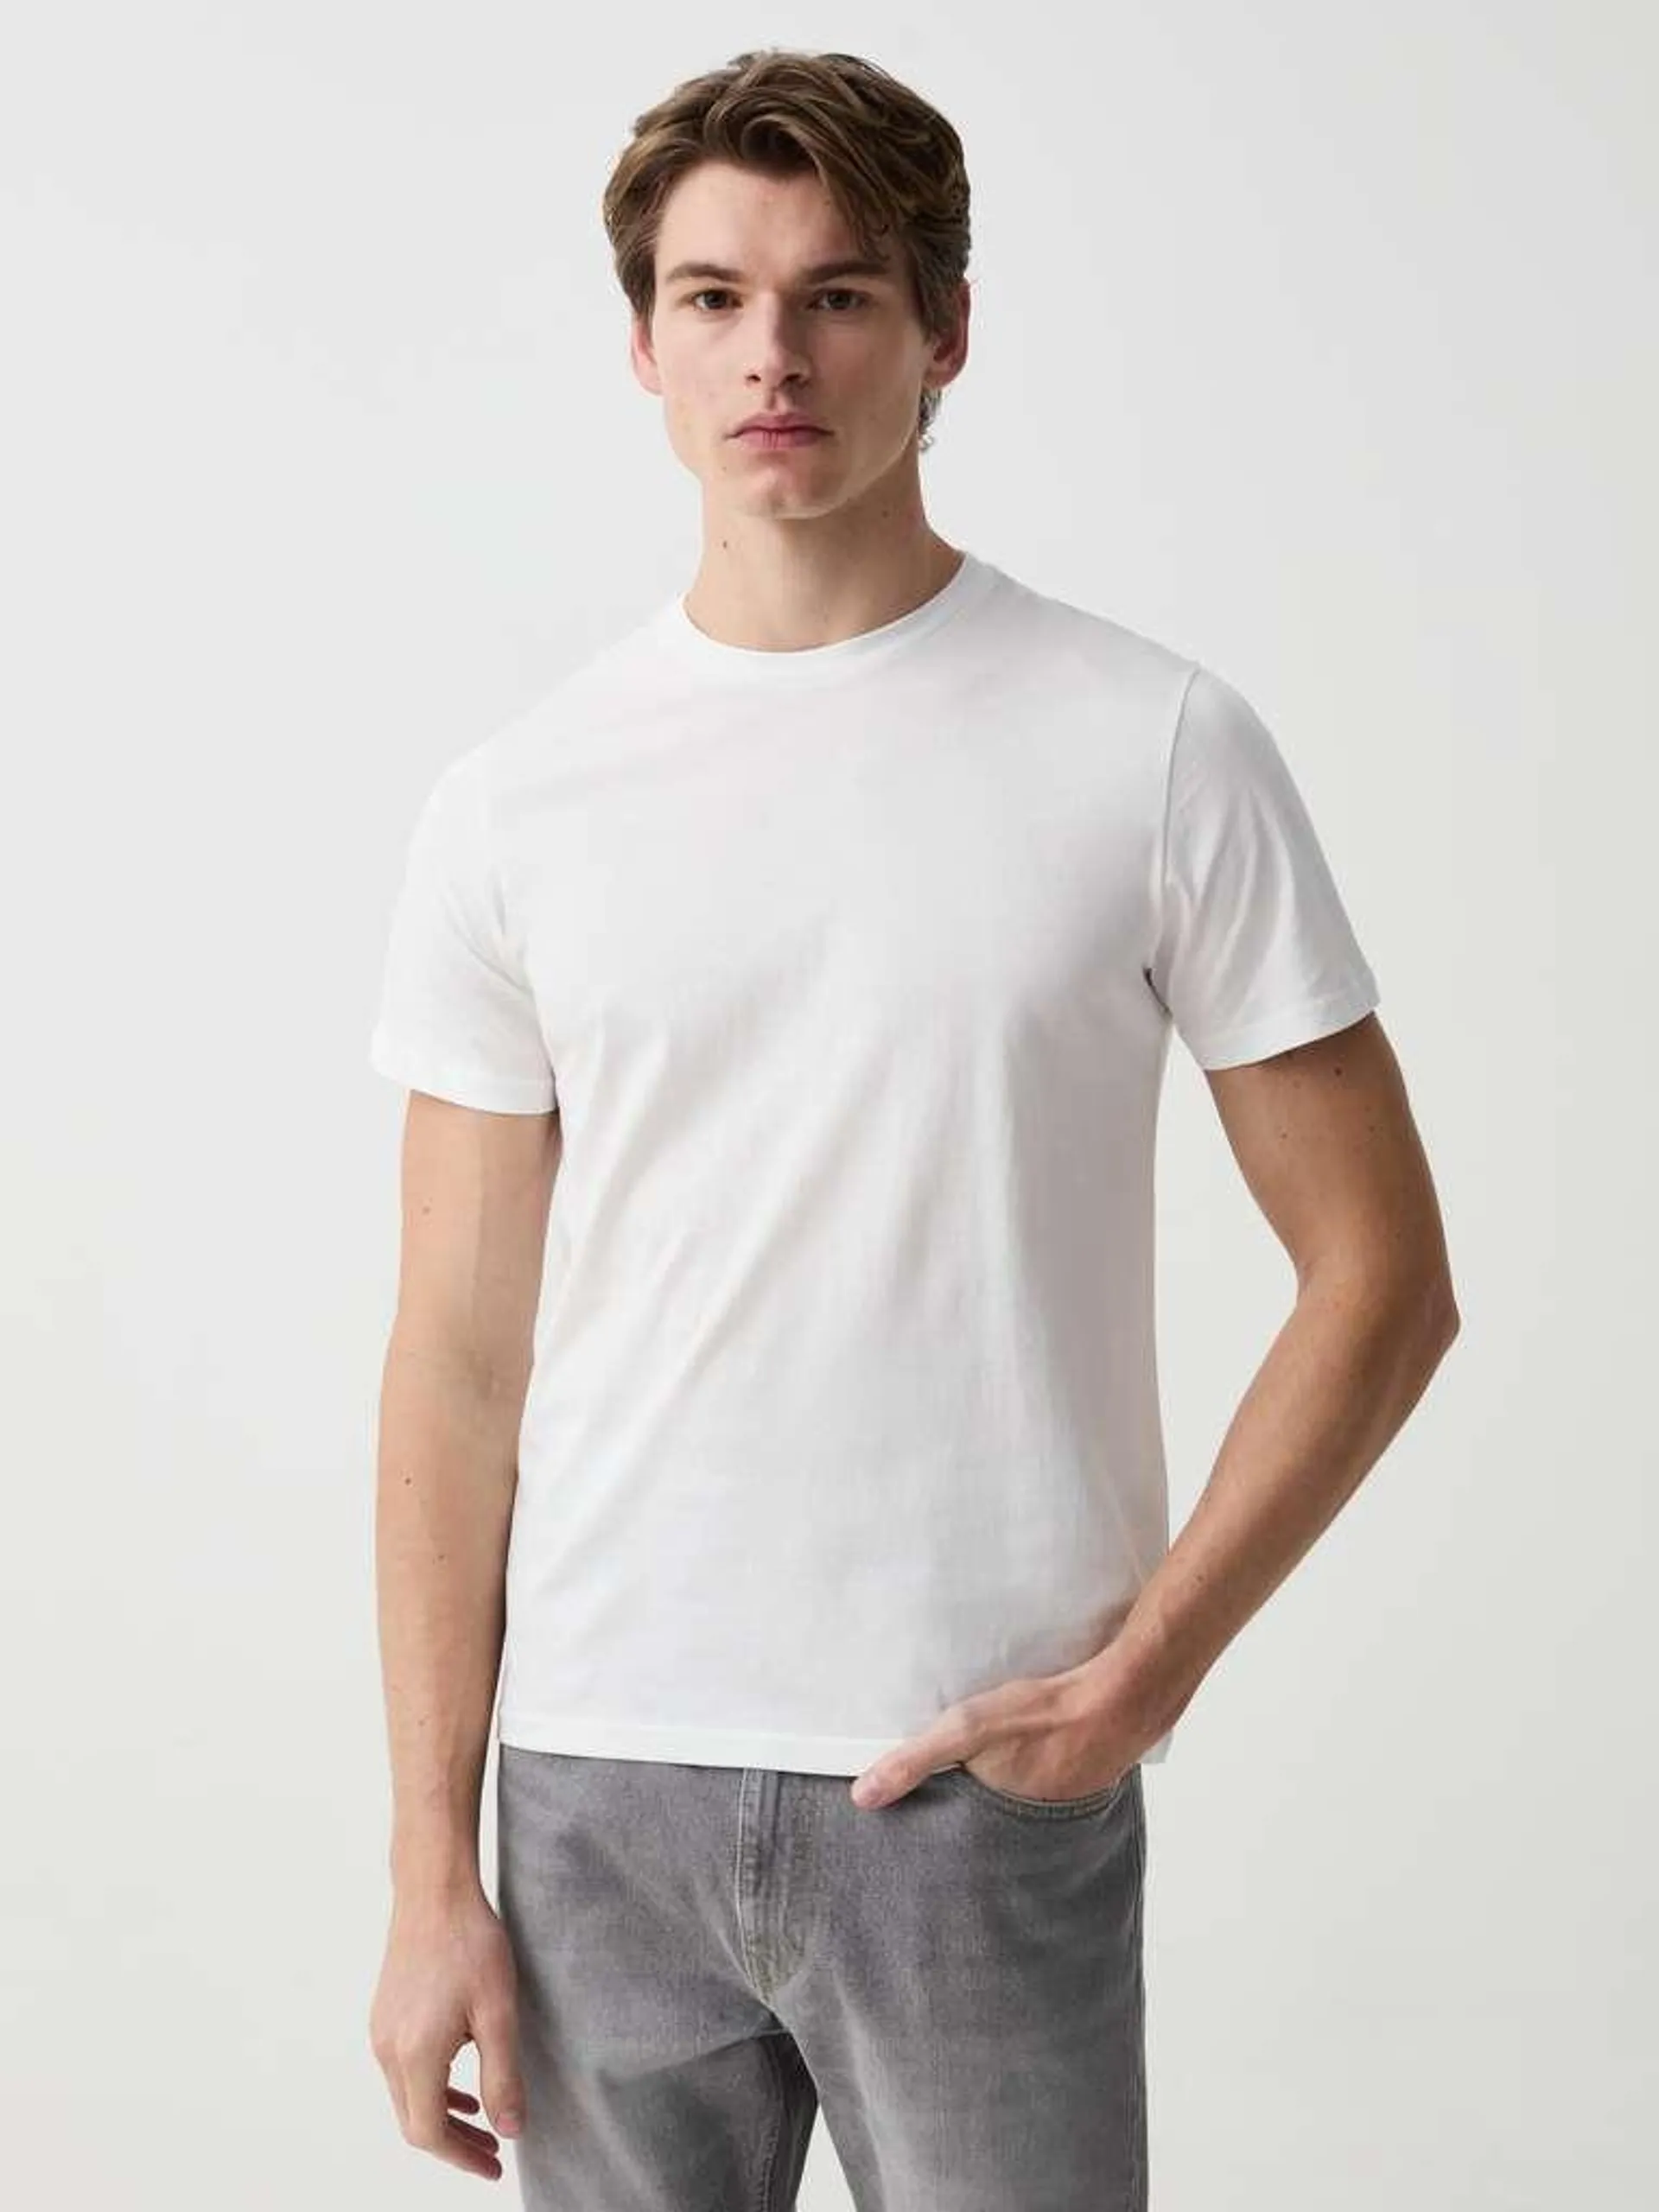 Optical White Cotton T-shirt with round neck